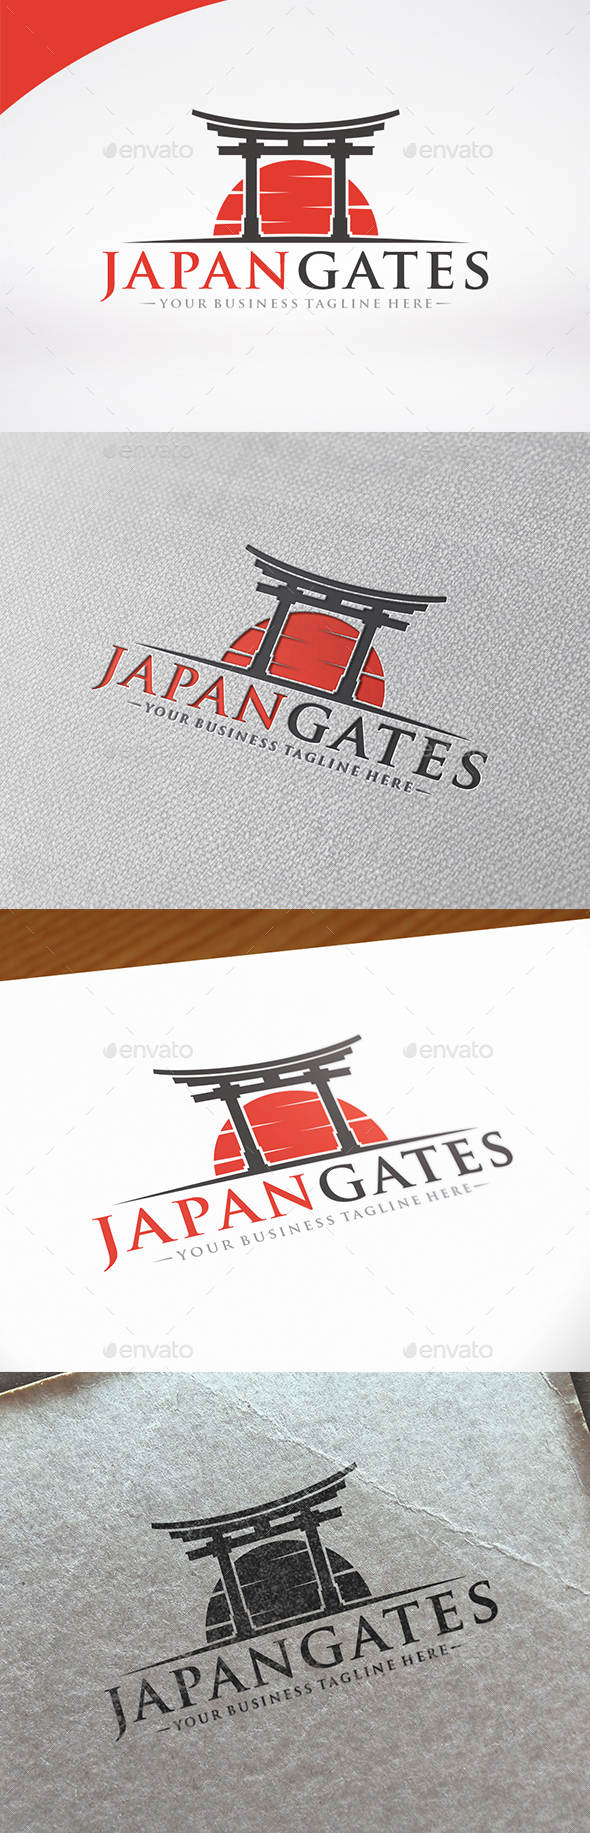 Japan Gate Logo Template